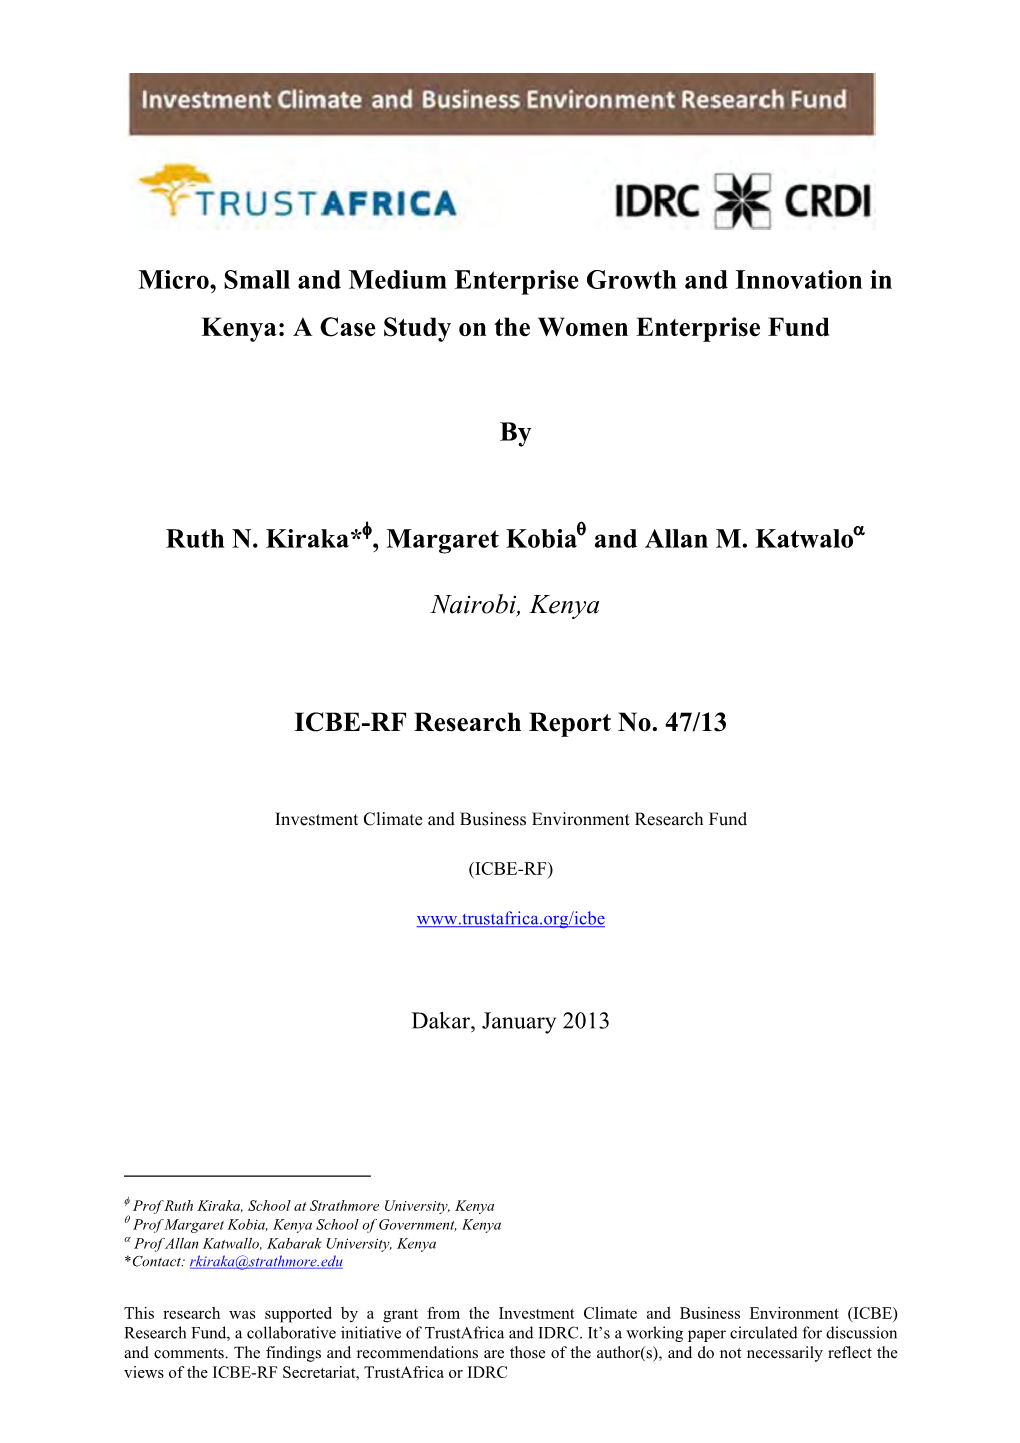 A Case Study on the Women Enterprise Fund by Ruth N. Kiraka